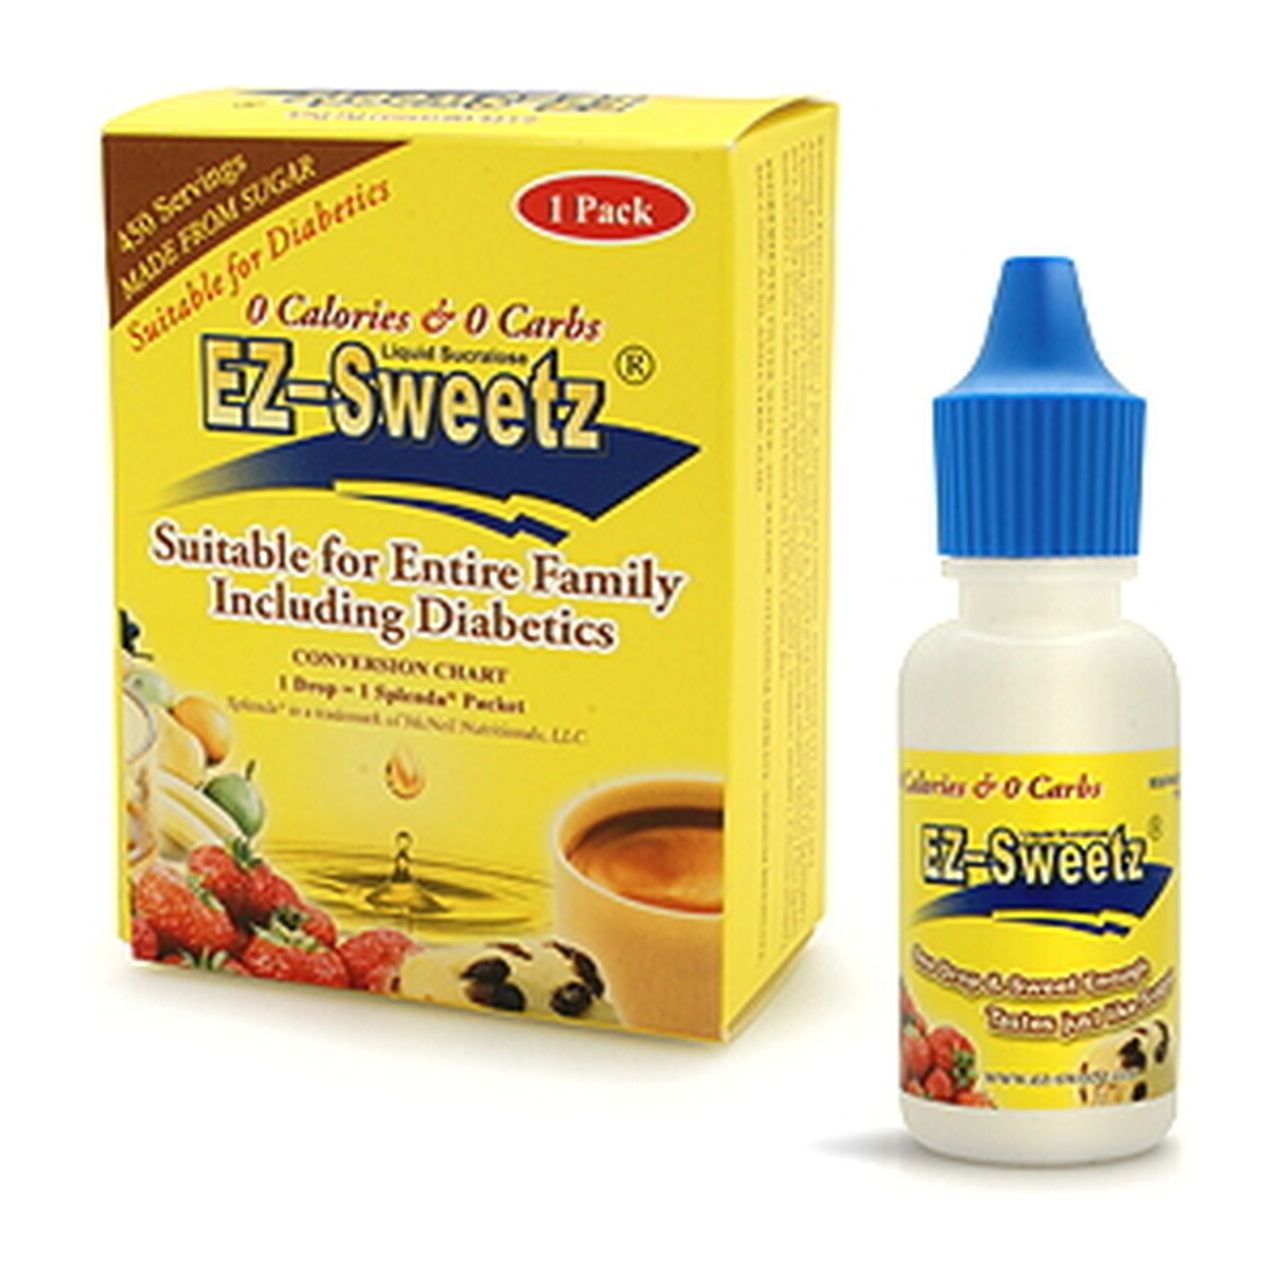 SweetLeaf Liquid Stevia - Raisin - Low Carb Canada